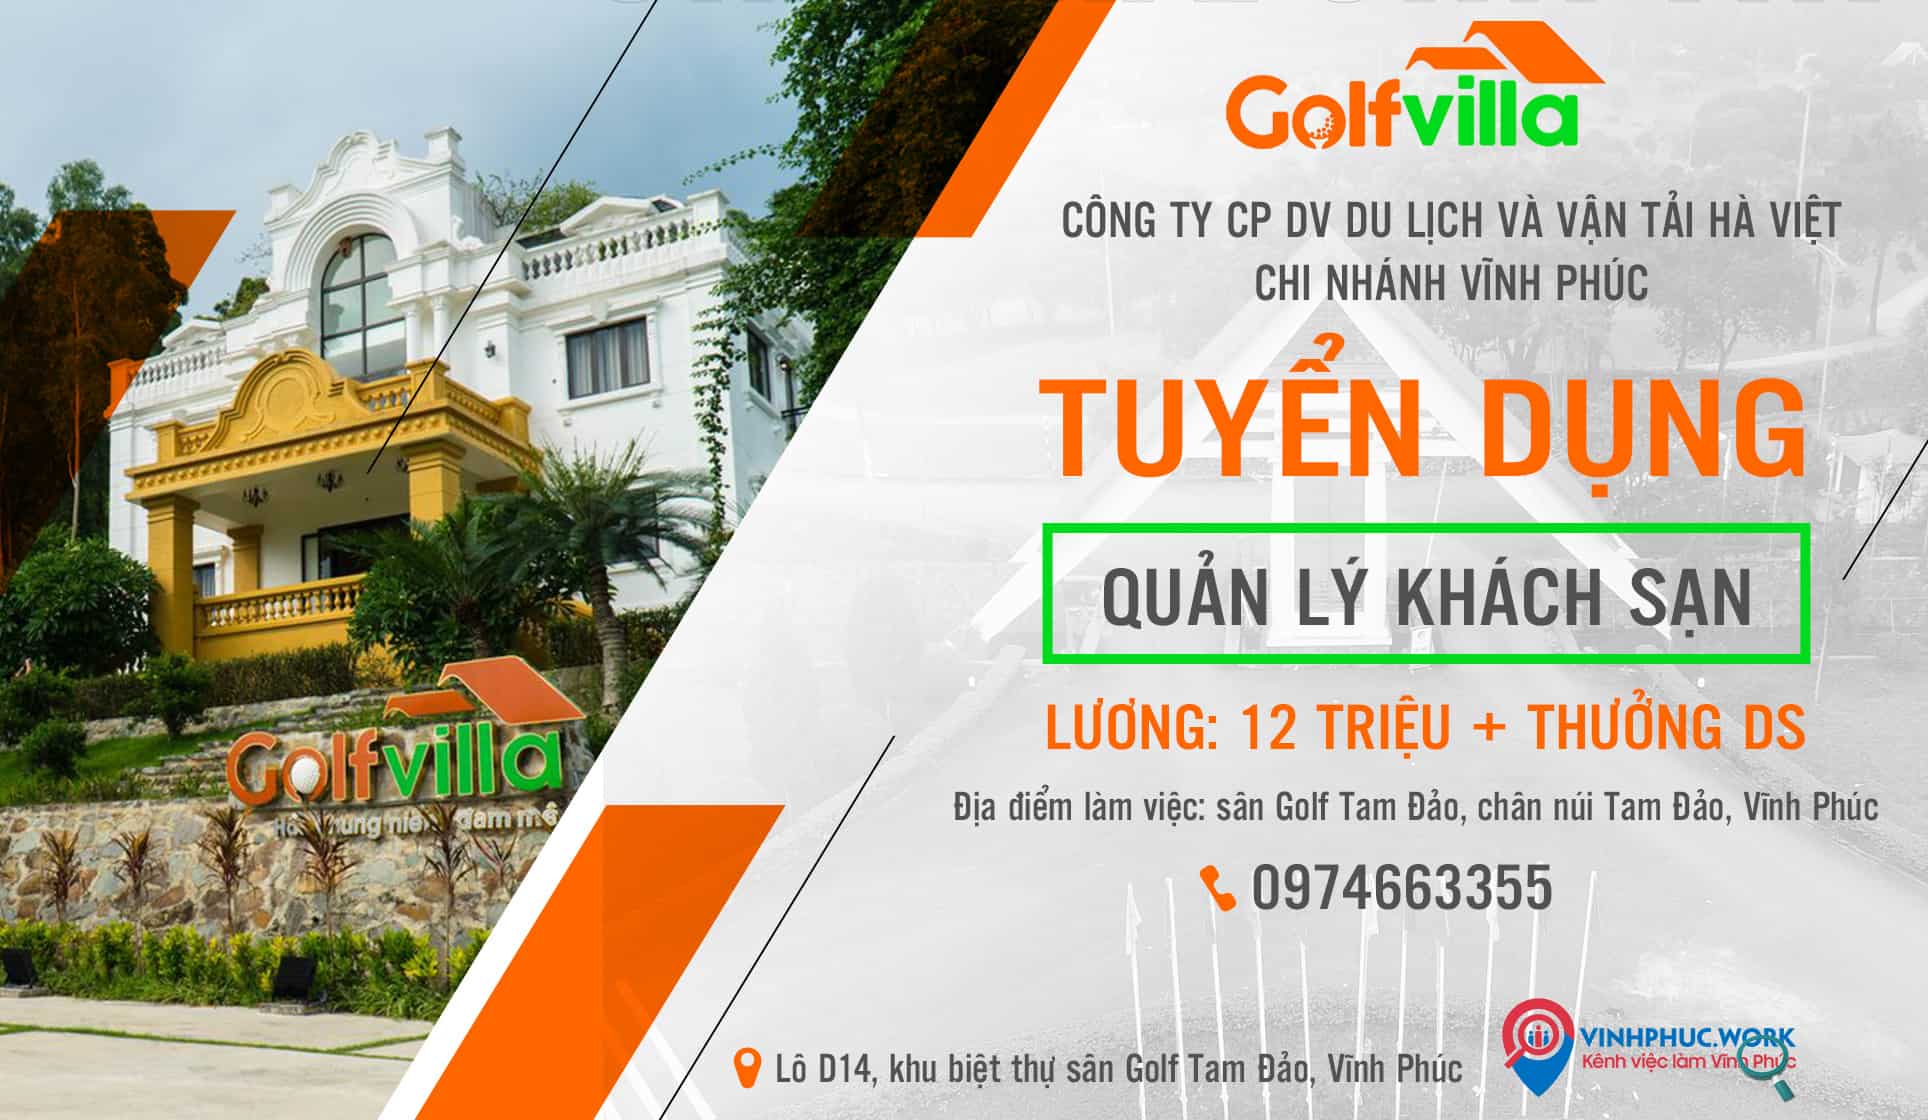 Golfvilla Tam Dao Tuyen Dung Quan Ly Khach San 1